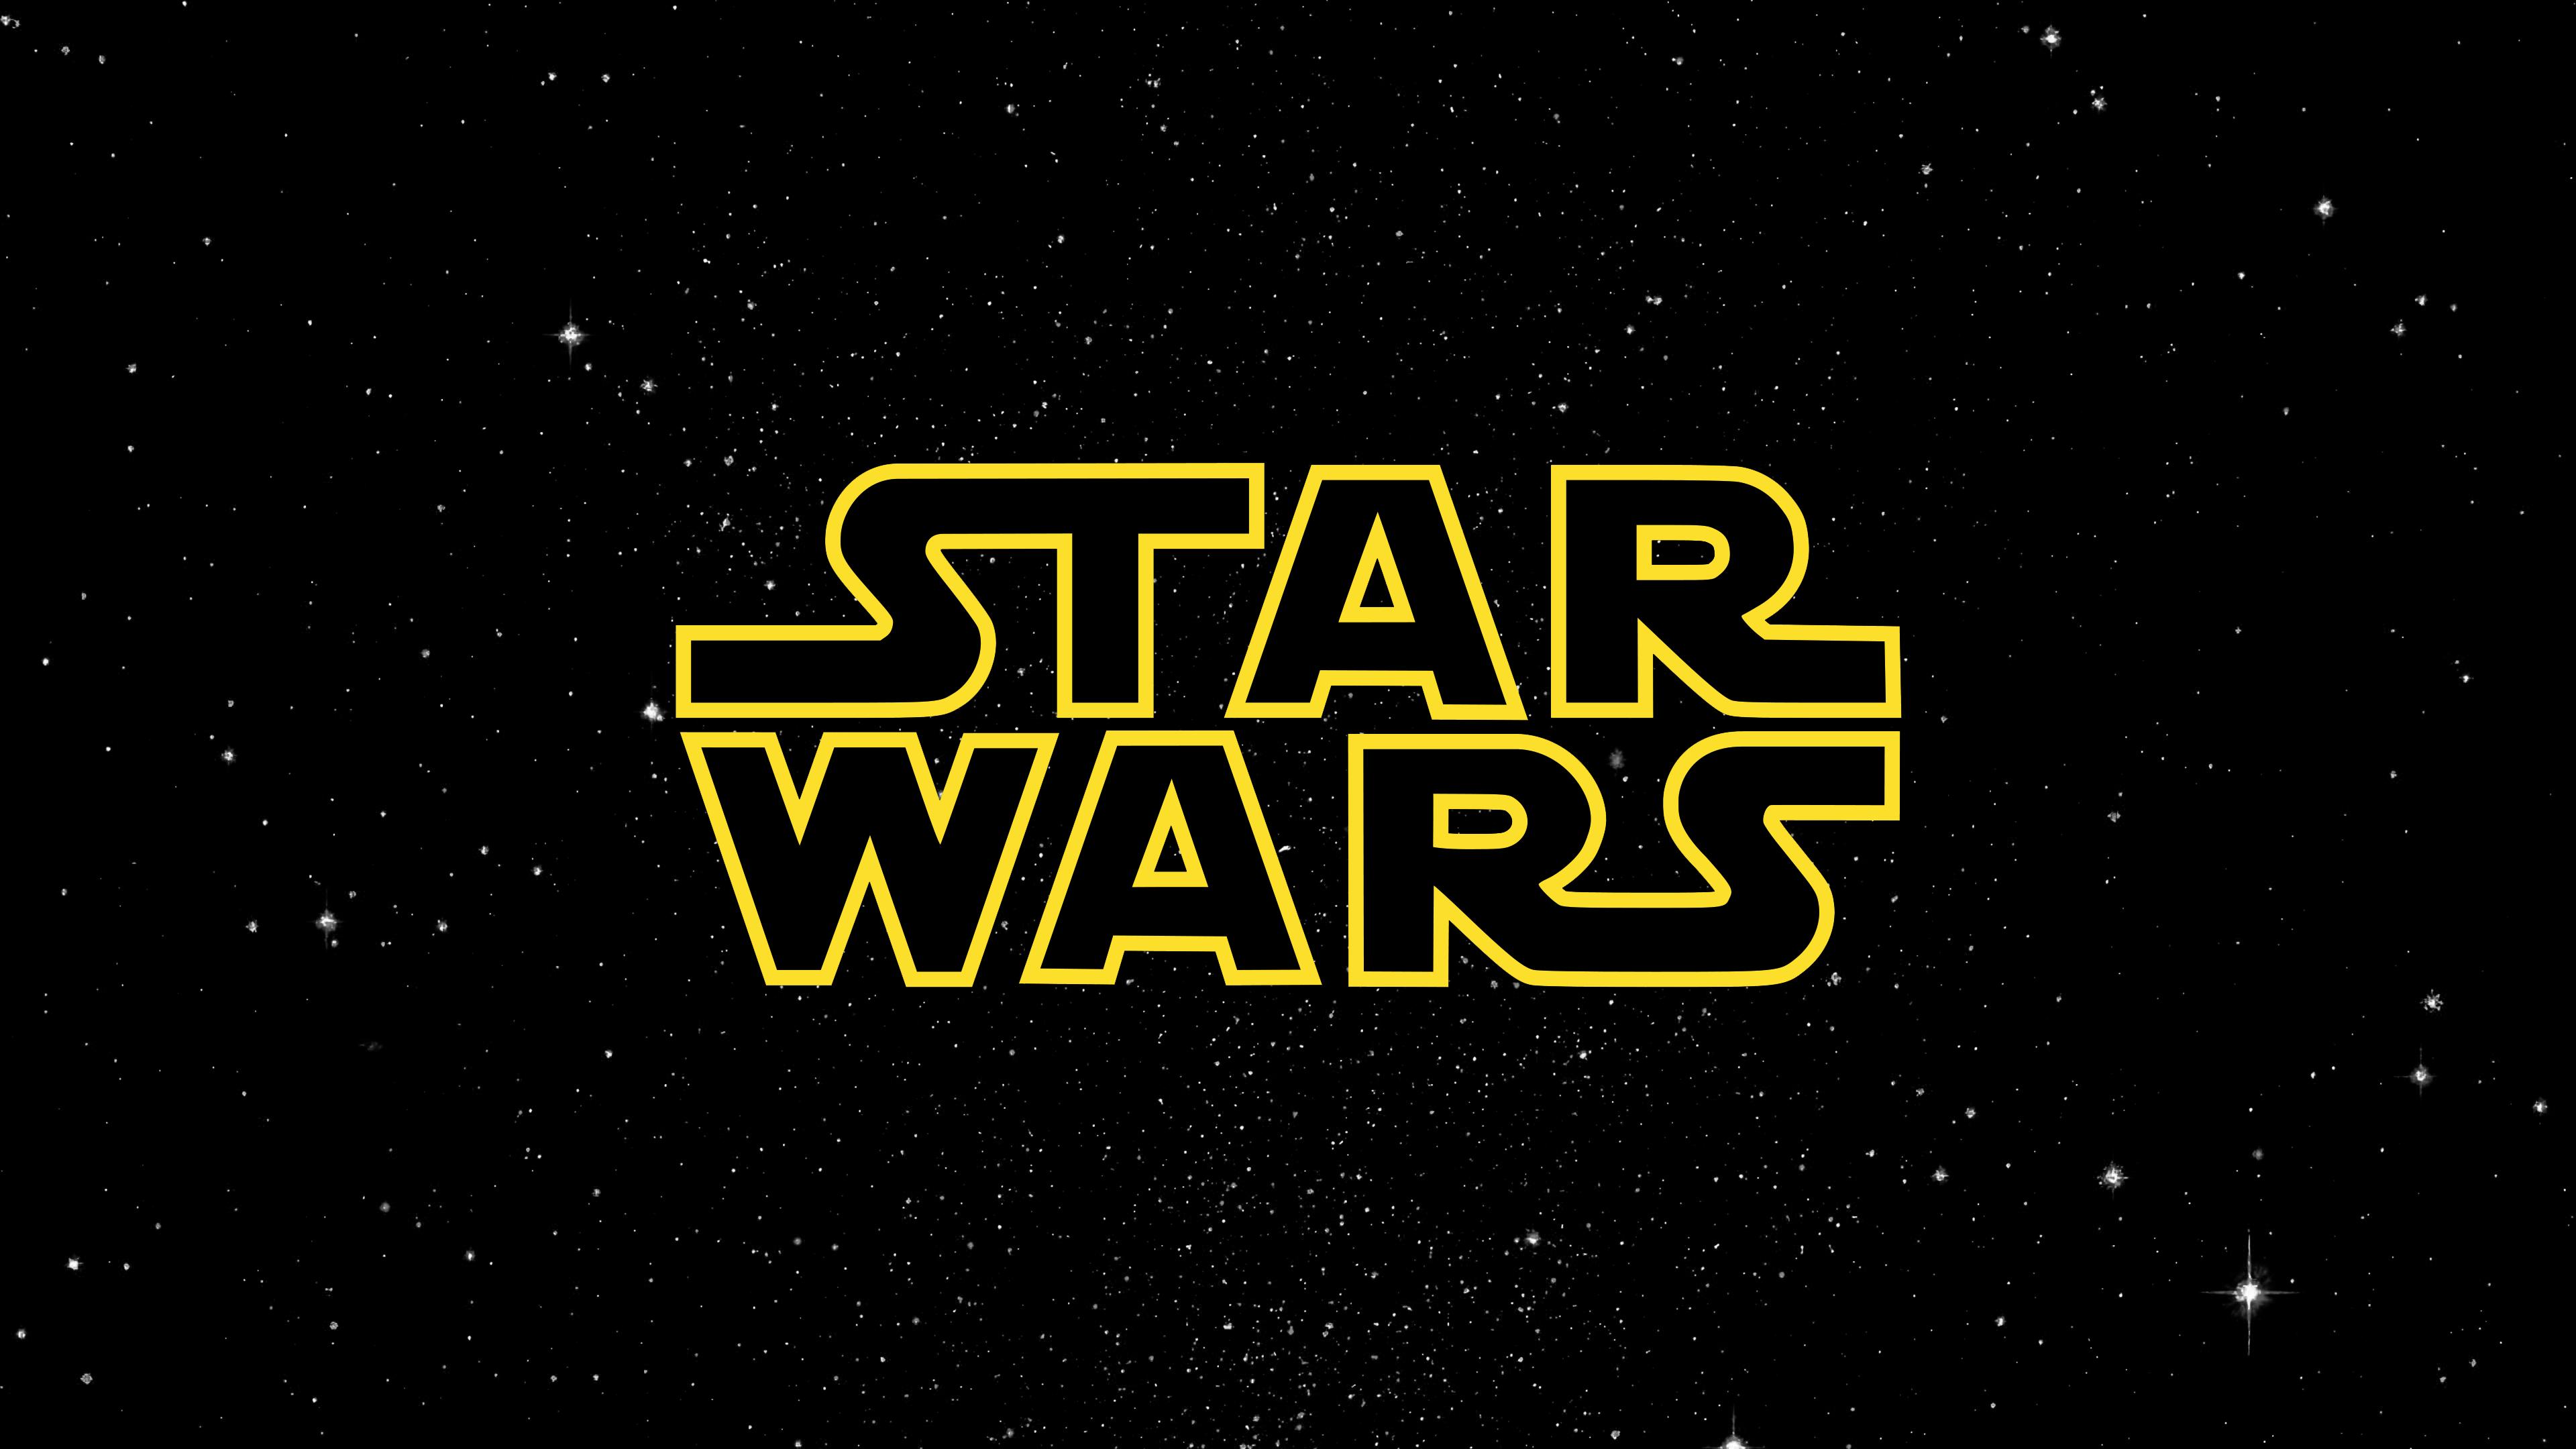 Basic Star Wars logo [3840x2160]